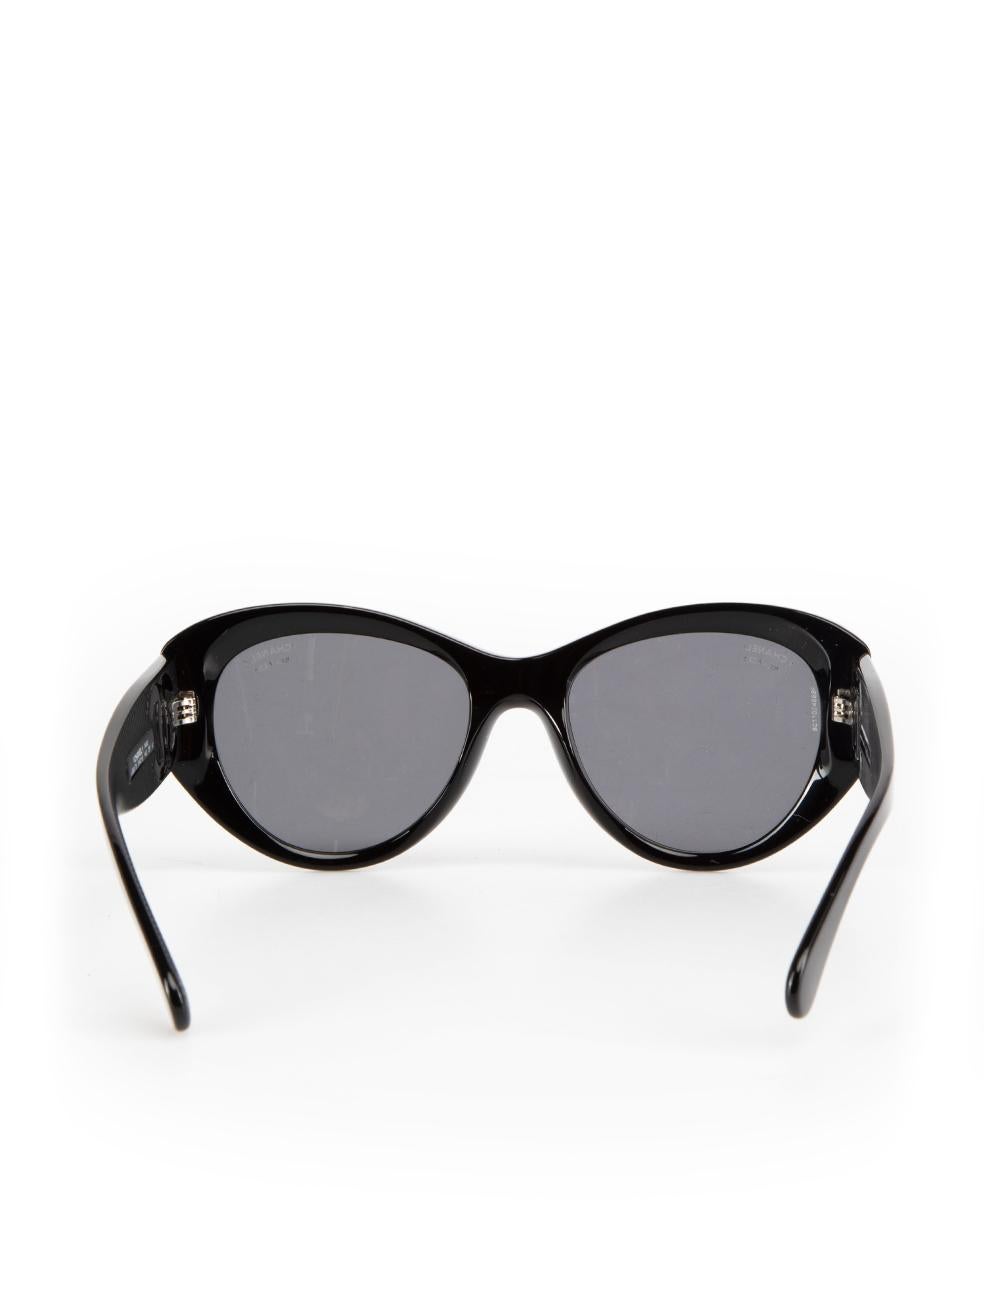 Women's Chanel Black Butterfly Frame Sunglasses For Sale